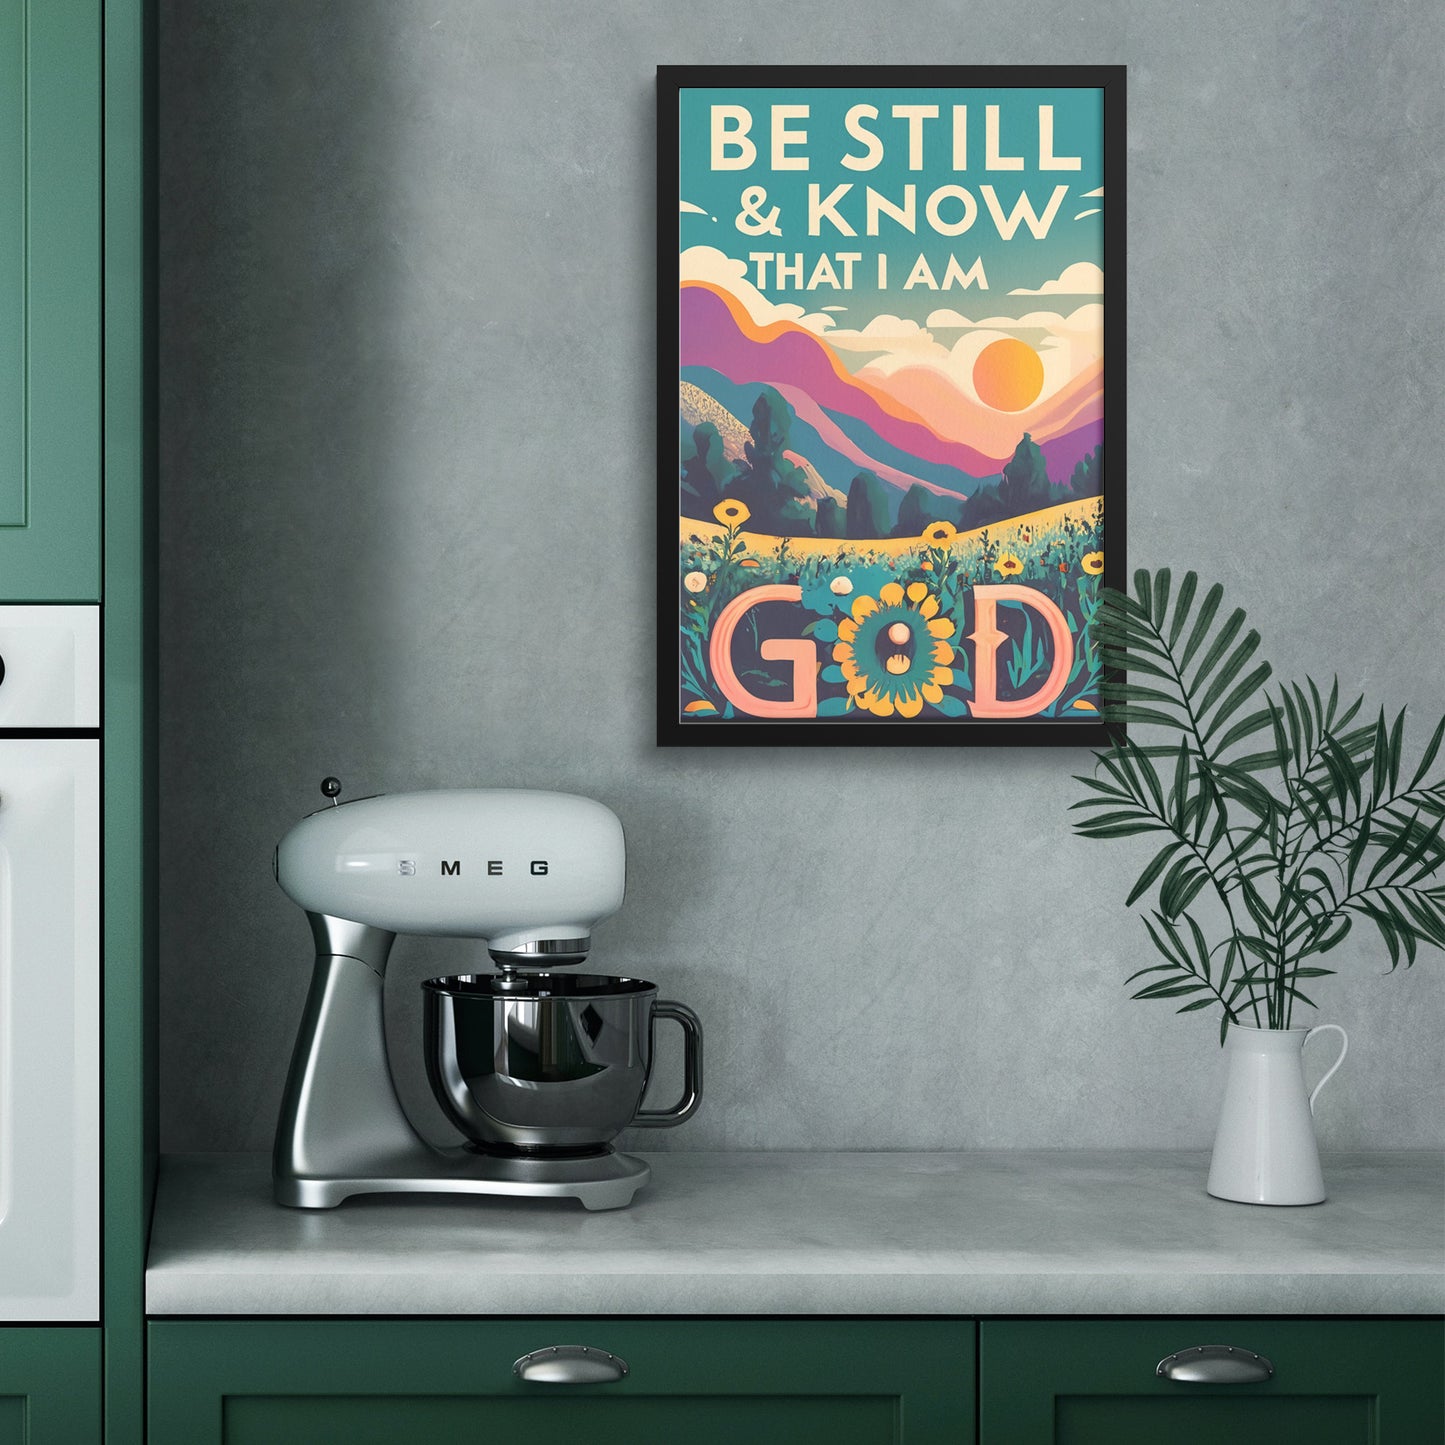 Be Still & Know that I am God Retro Style Framed Print